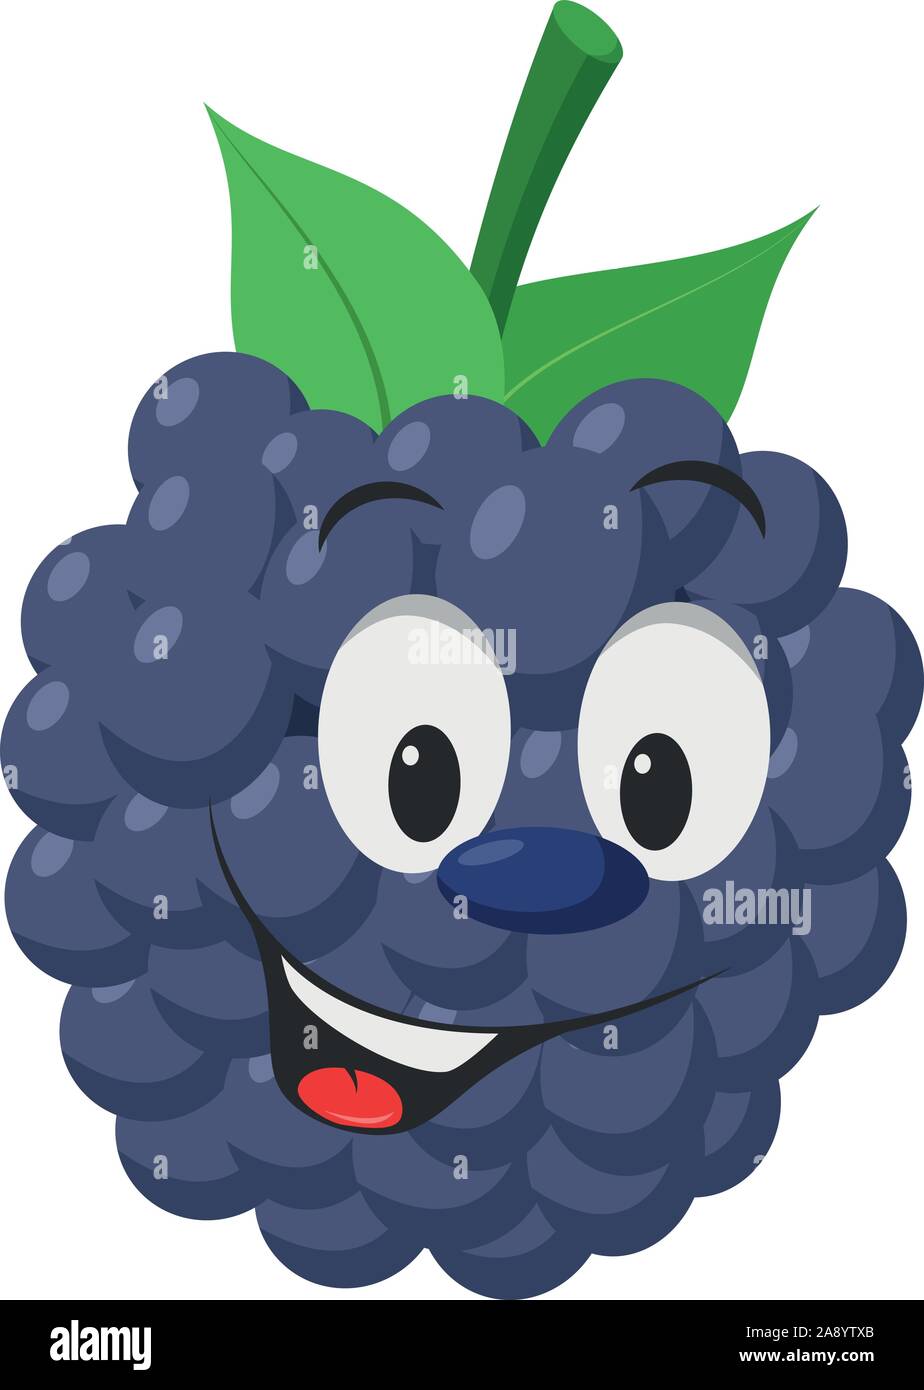 cartoon blackberries